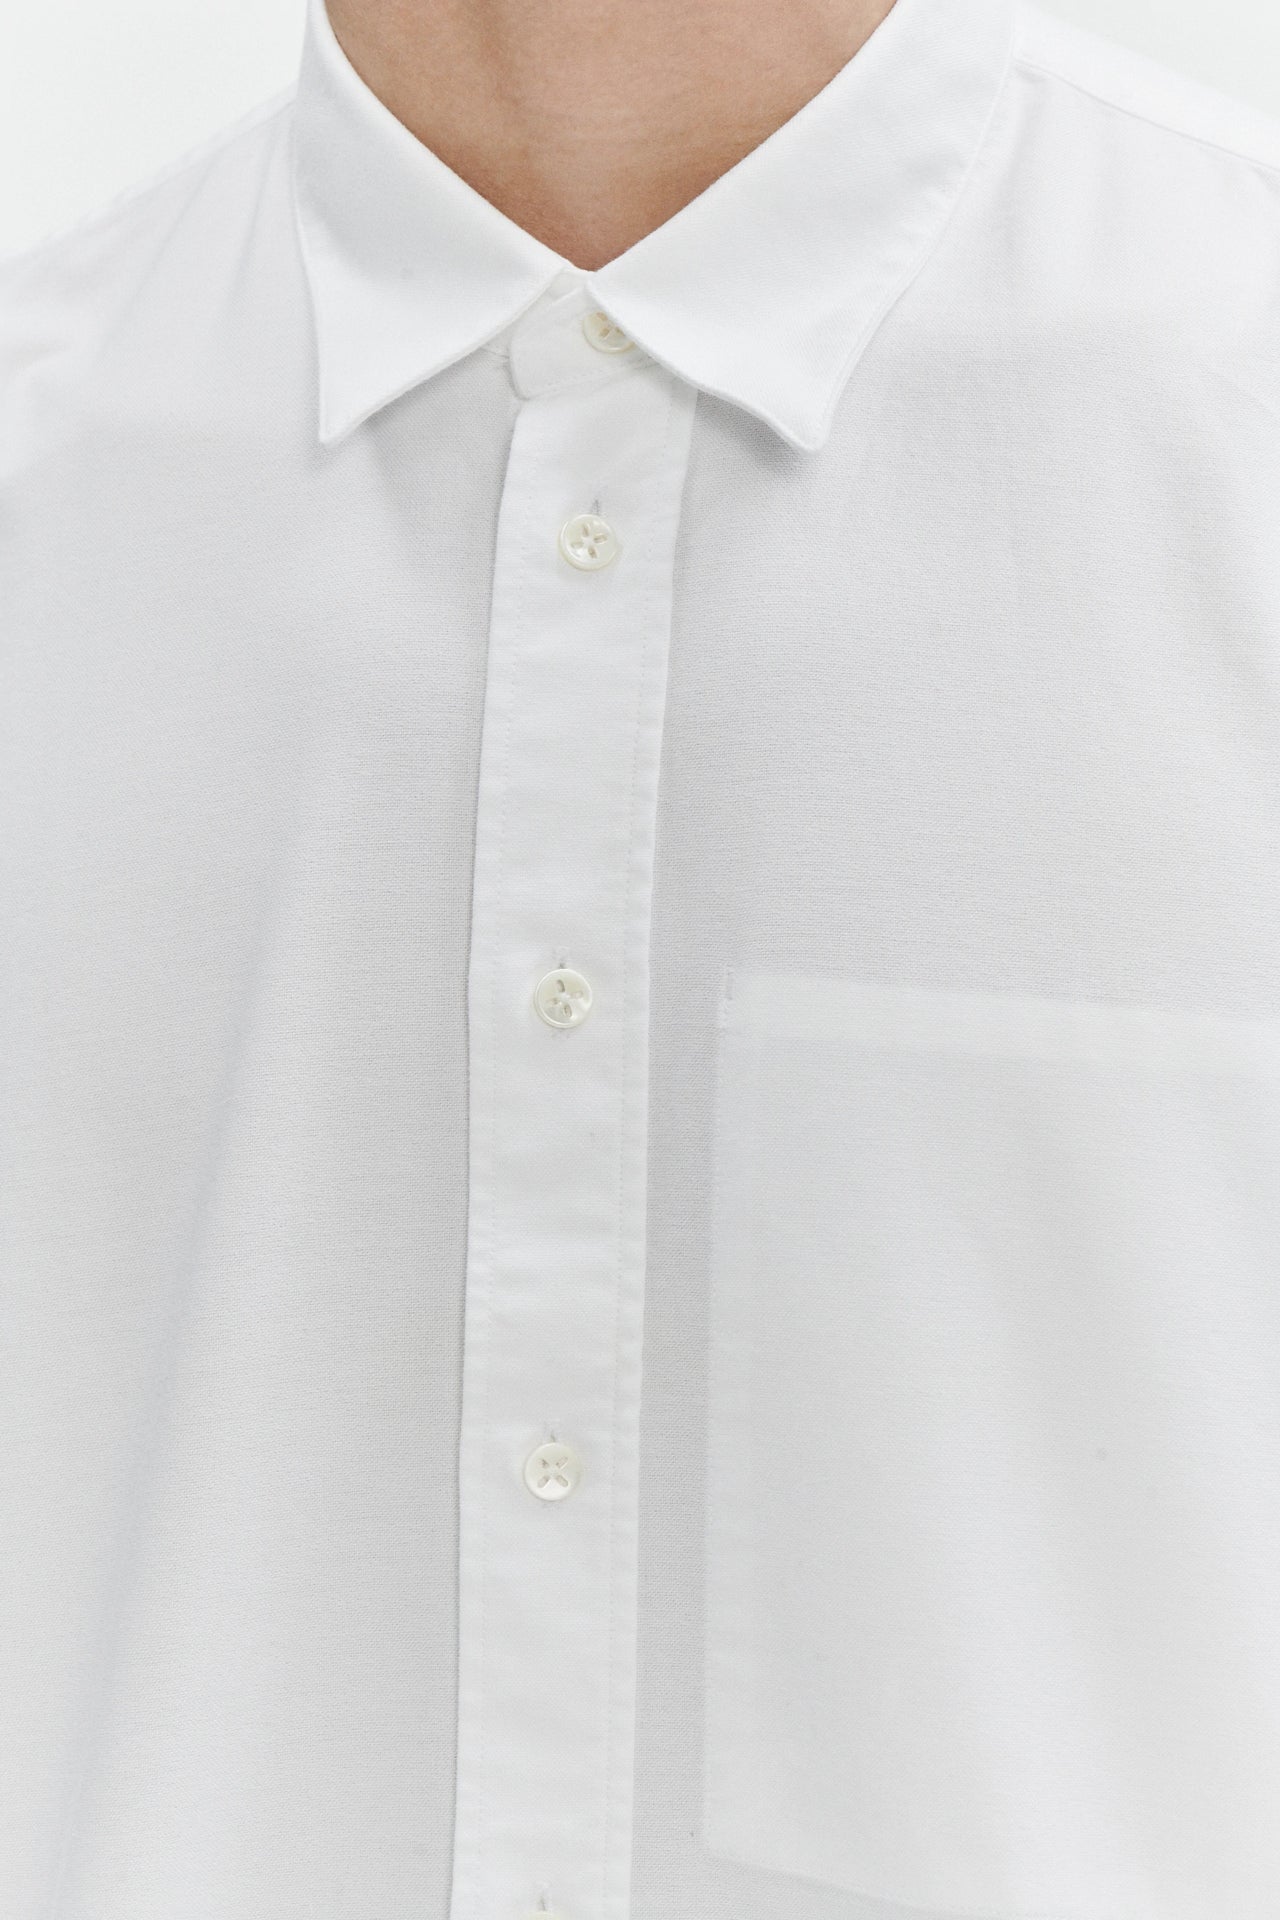 Oversized Rider Shirt in a White Portuguese Oxford Cotton